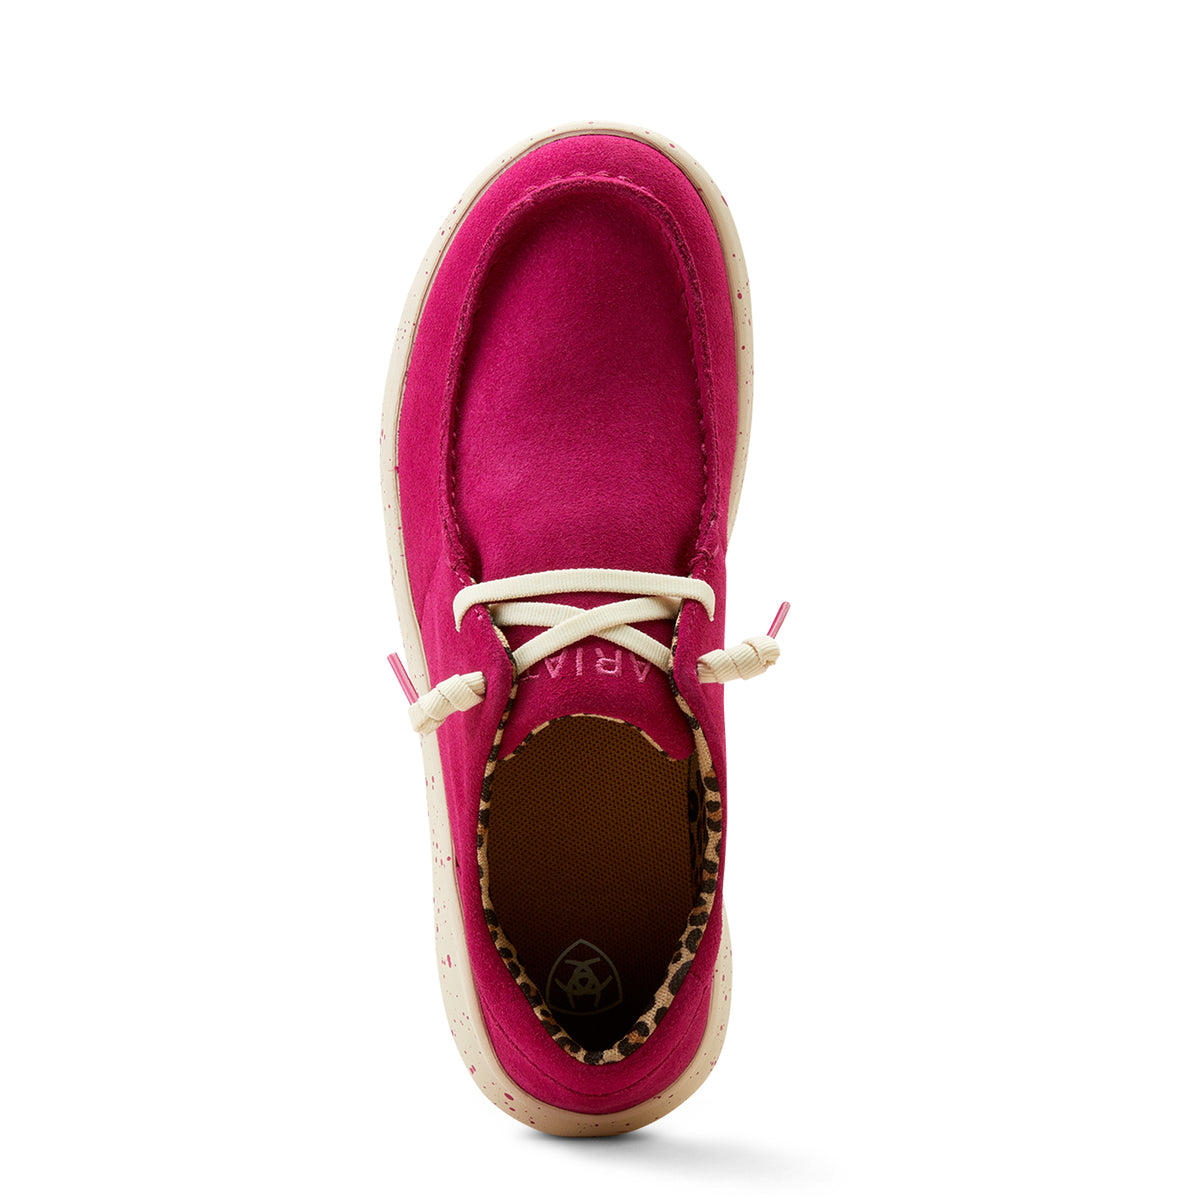 Ariat Women's Hilo Shoe